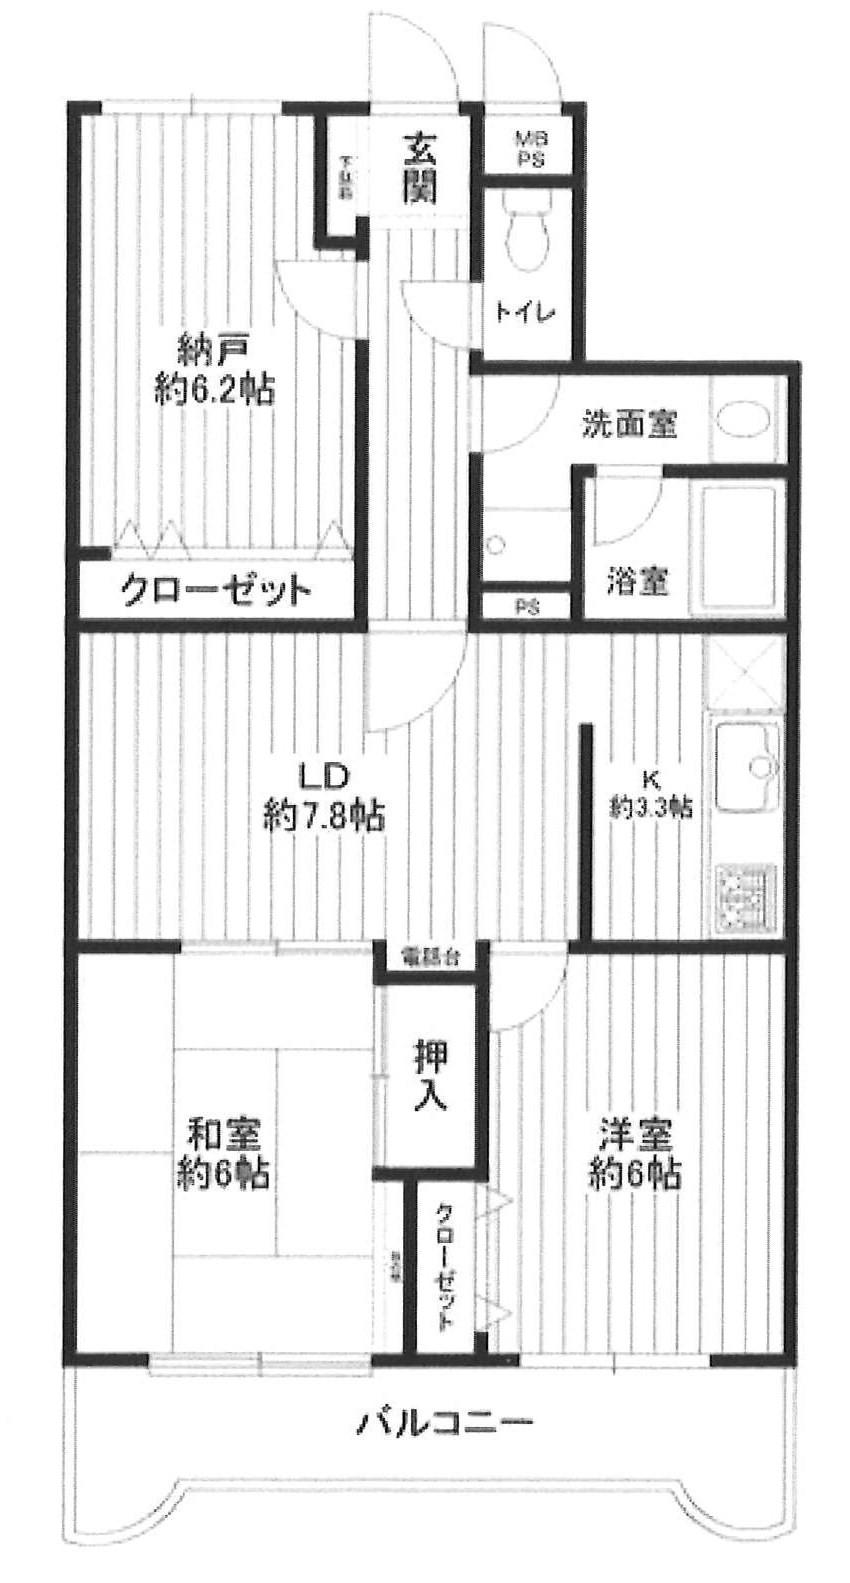 Floor plan. 2LDK + S (storeroom), Price 19.9 million yen, Footprint 66.5 sq m , Balcony area 8.19 sq m